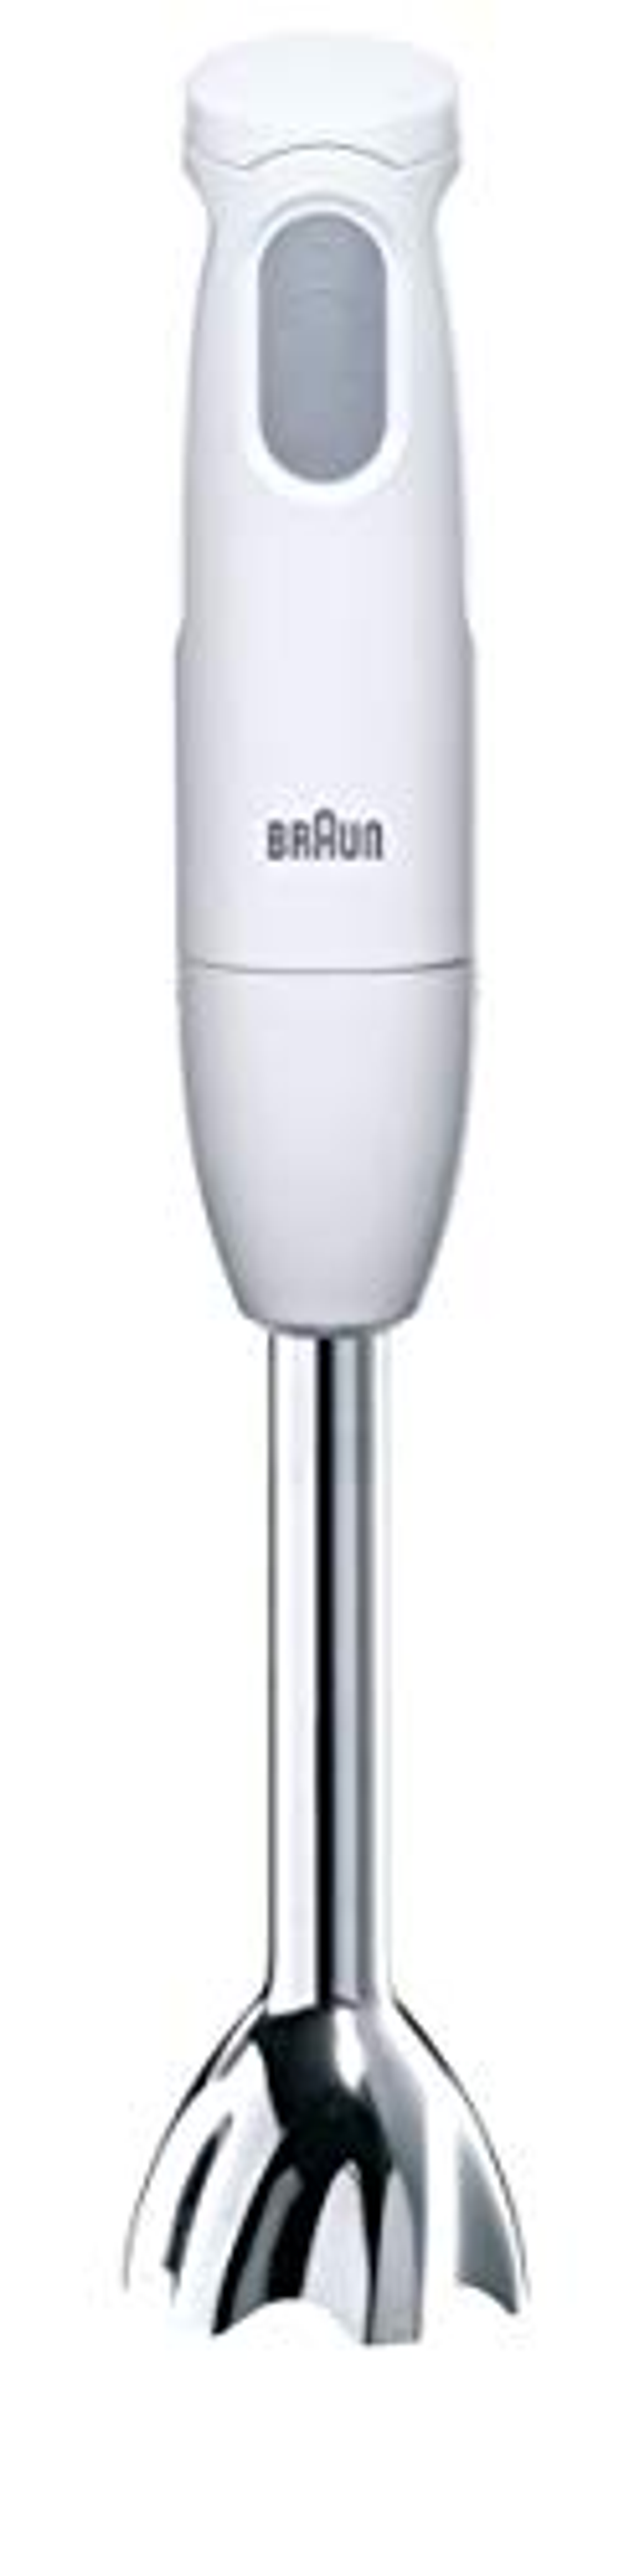 BRAUN MQ 100 (450 Weiß/Grau Stabmixer Watt, 600 CURRY ml) WEISS/GRAU